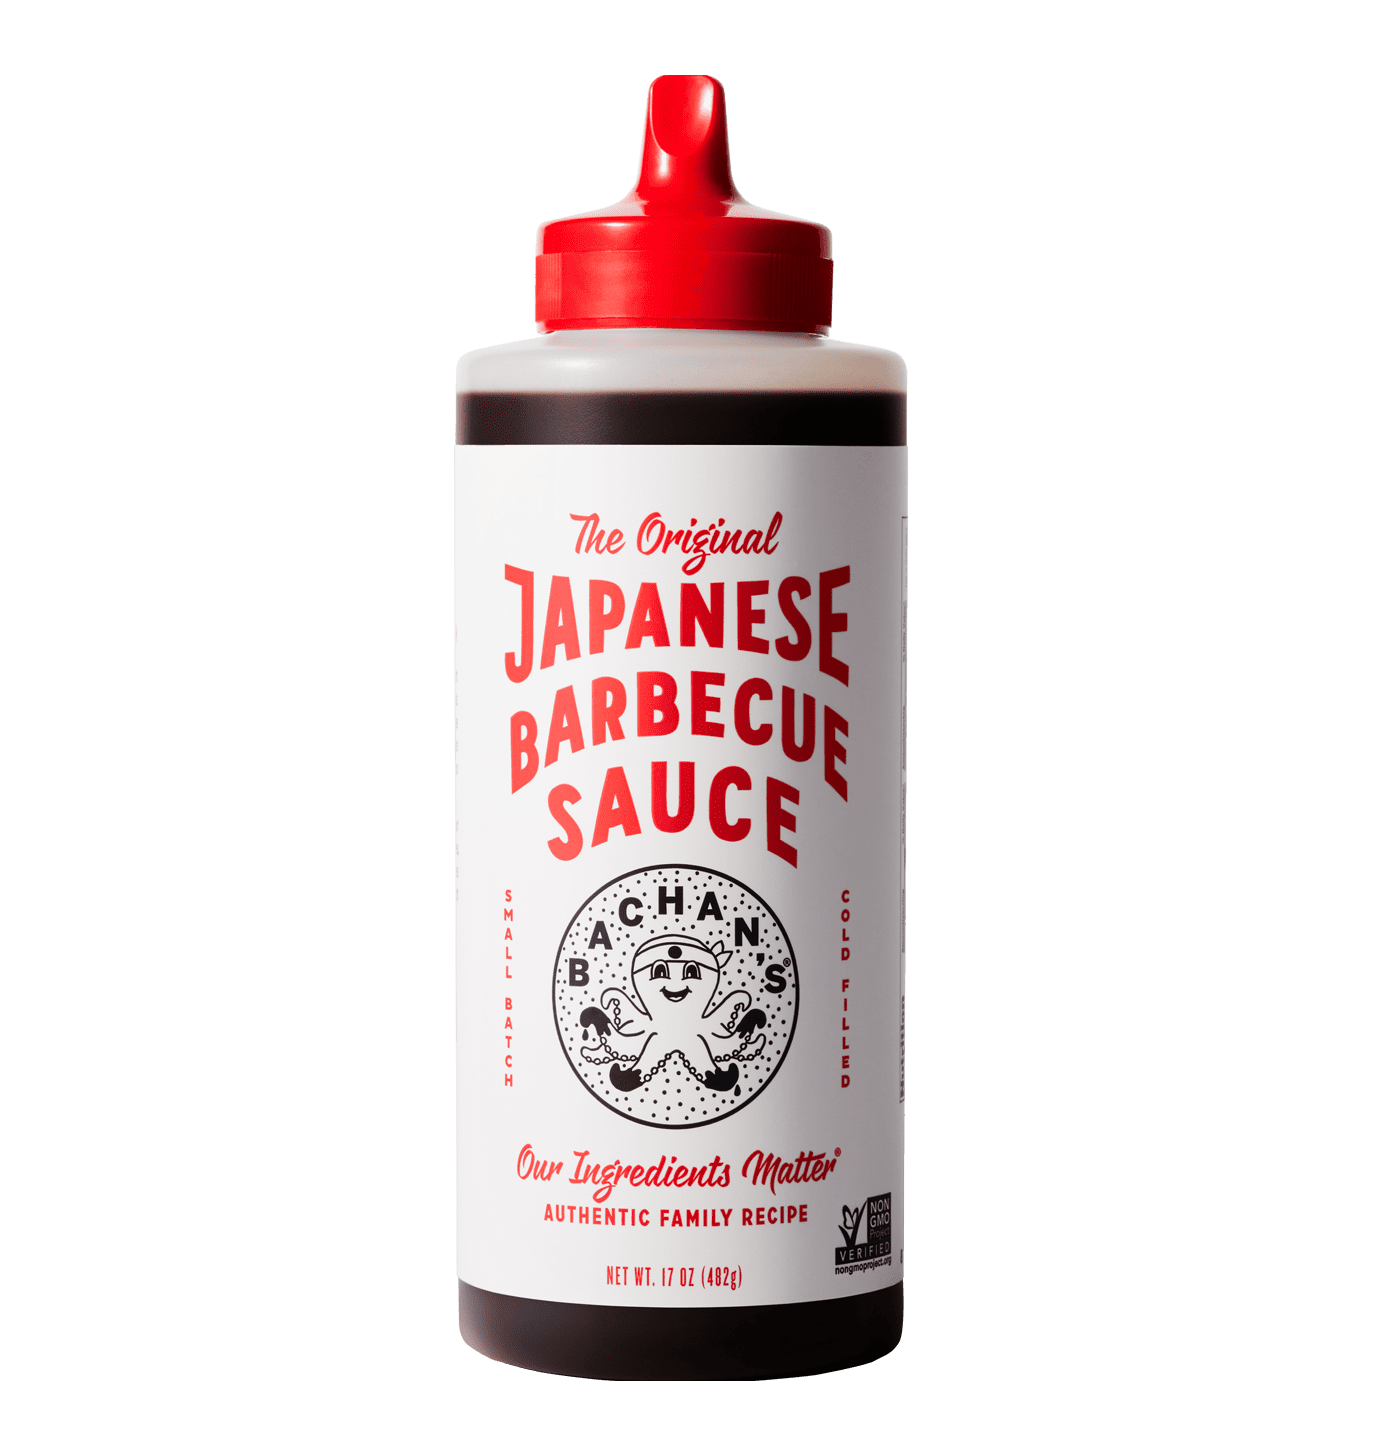 Bachan's - Original Japanese Barbecue Sauce, 17 oz.